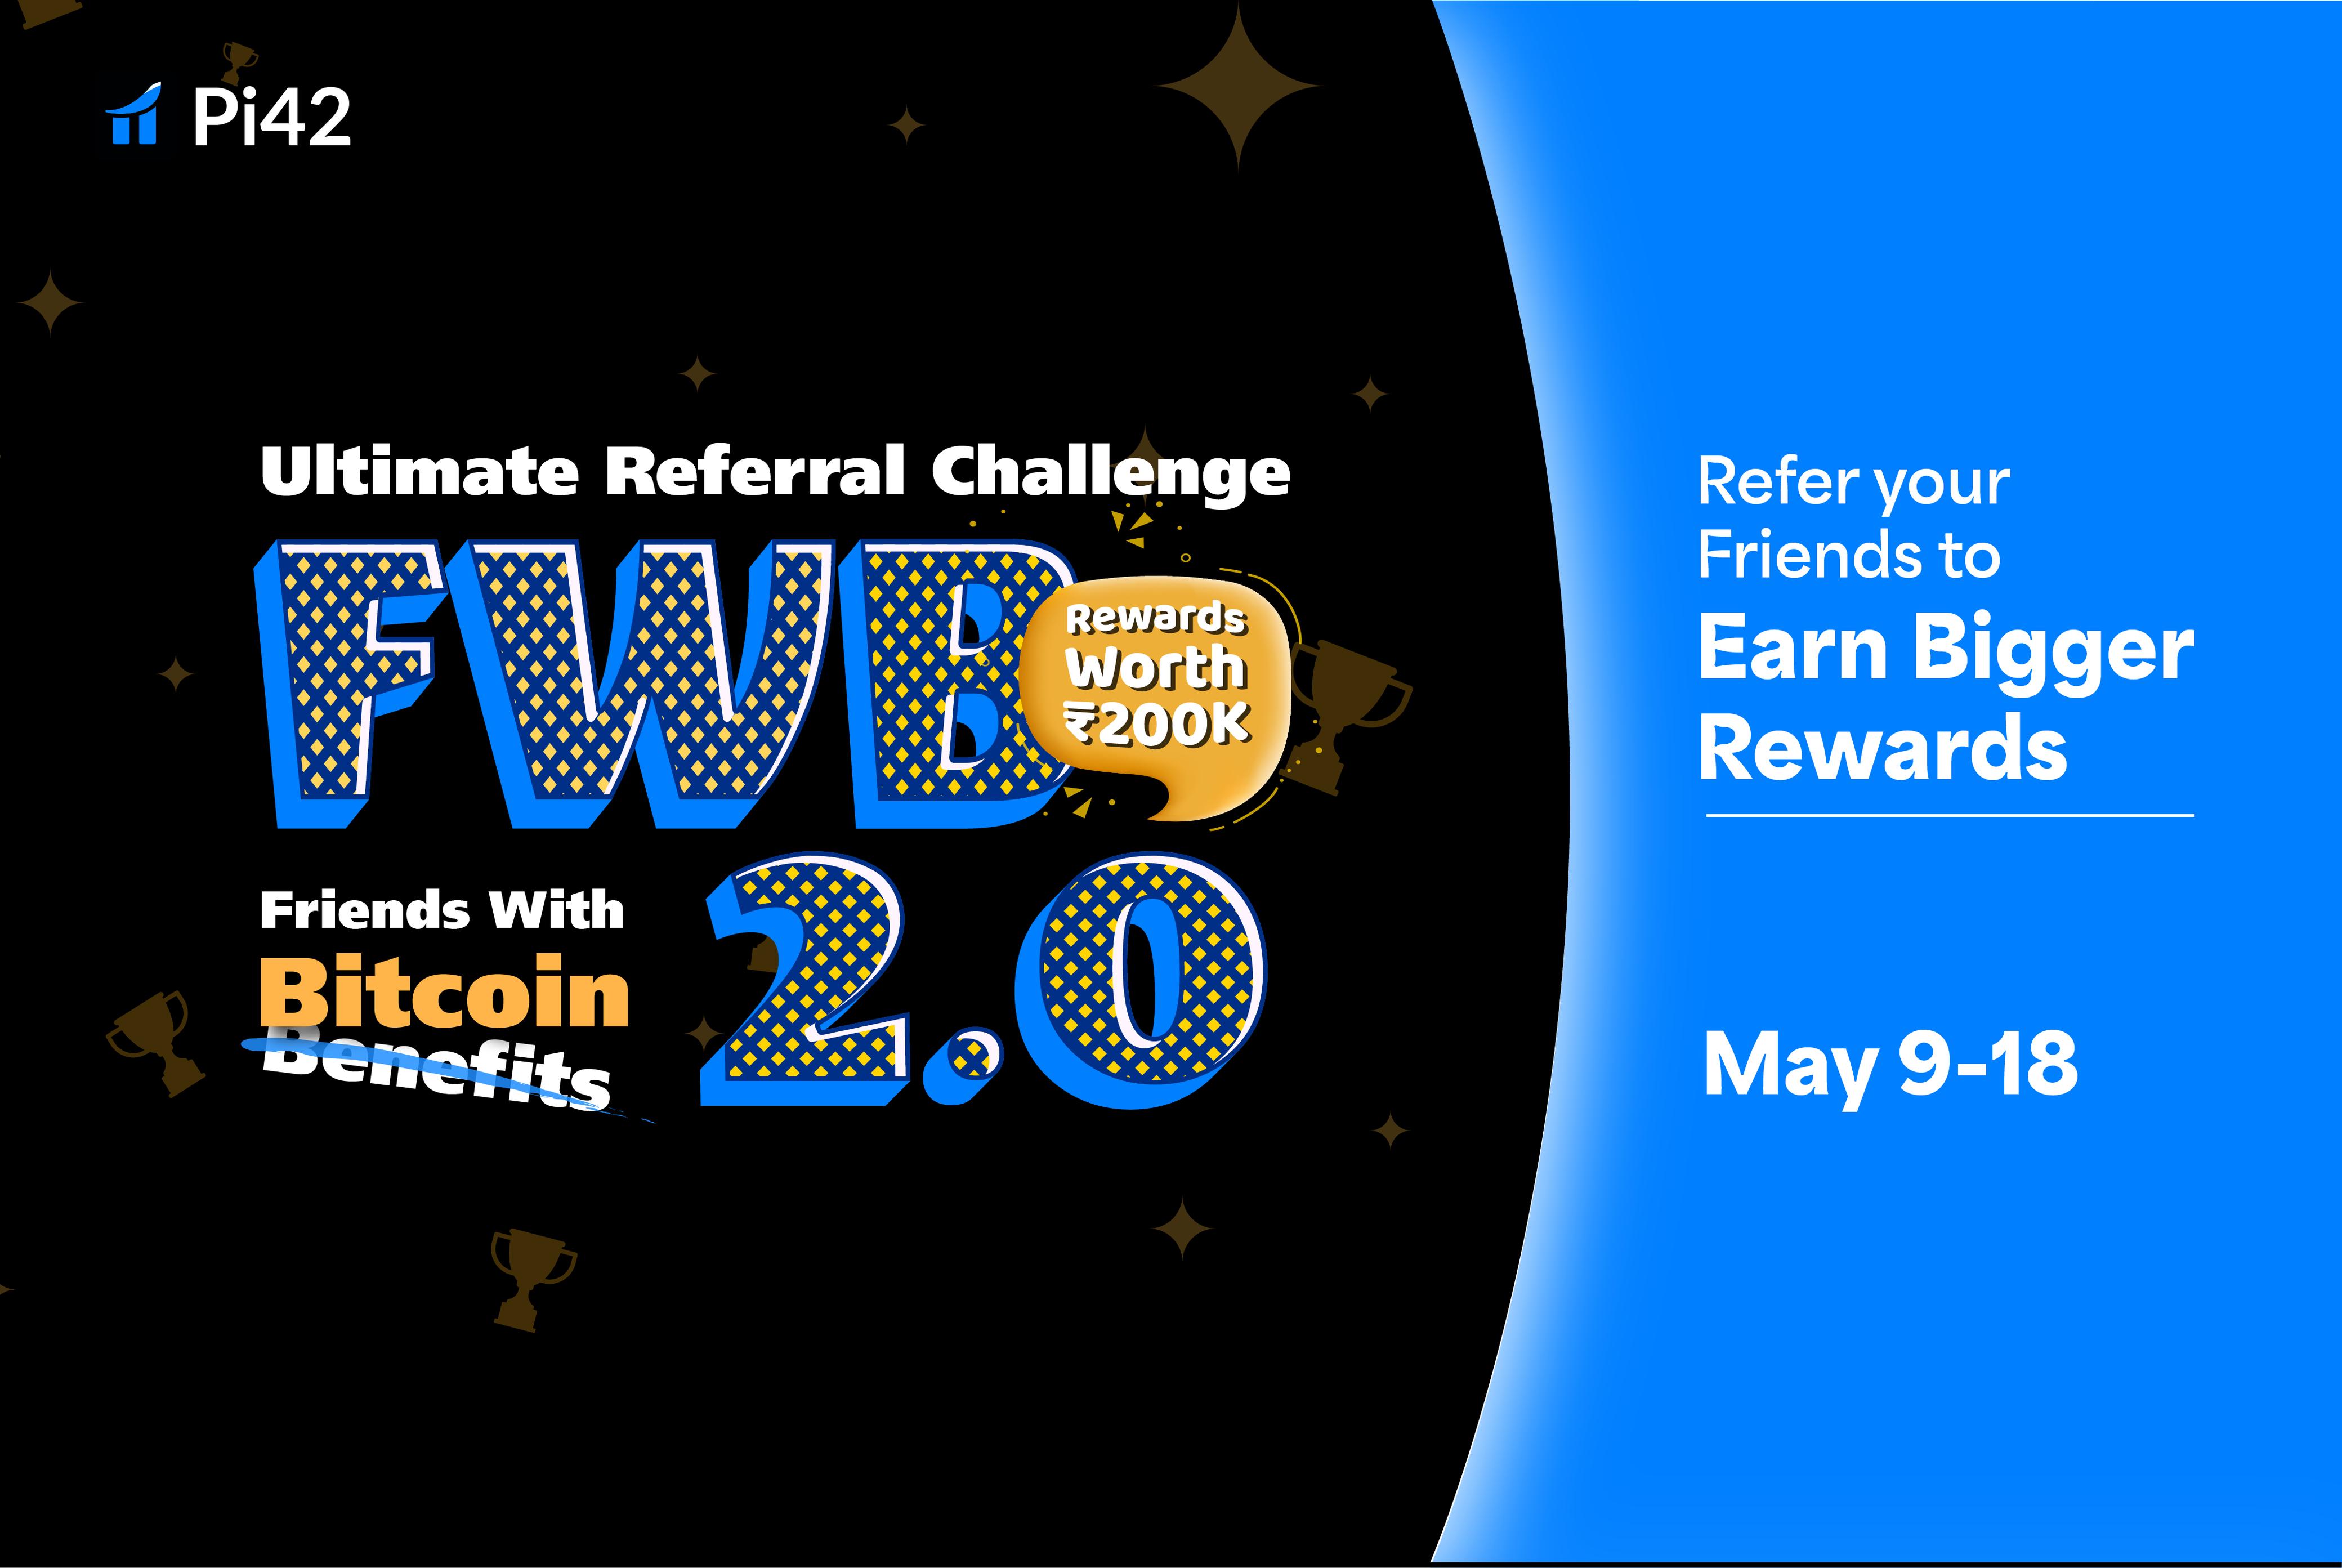 FWB referral challenge